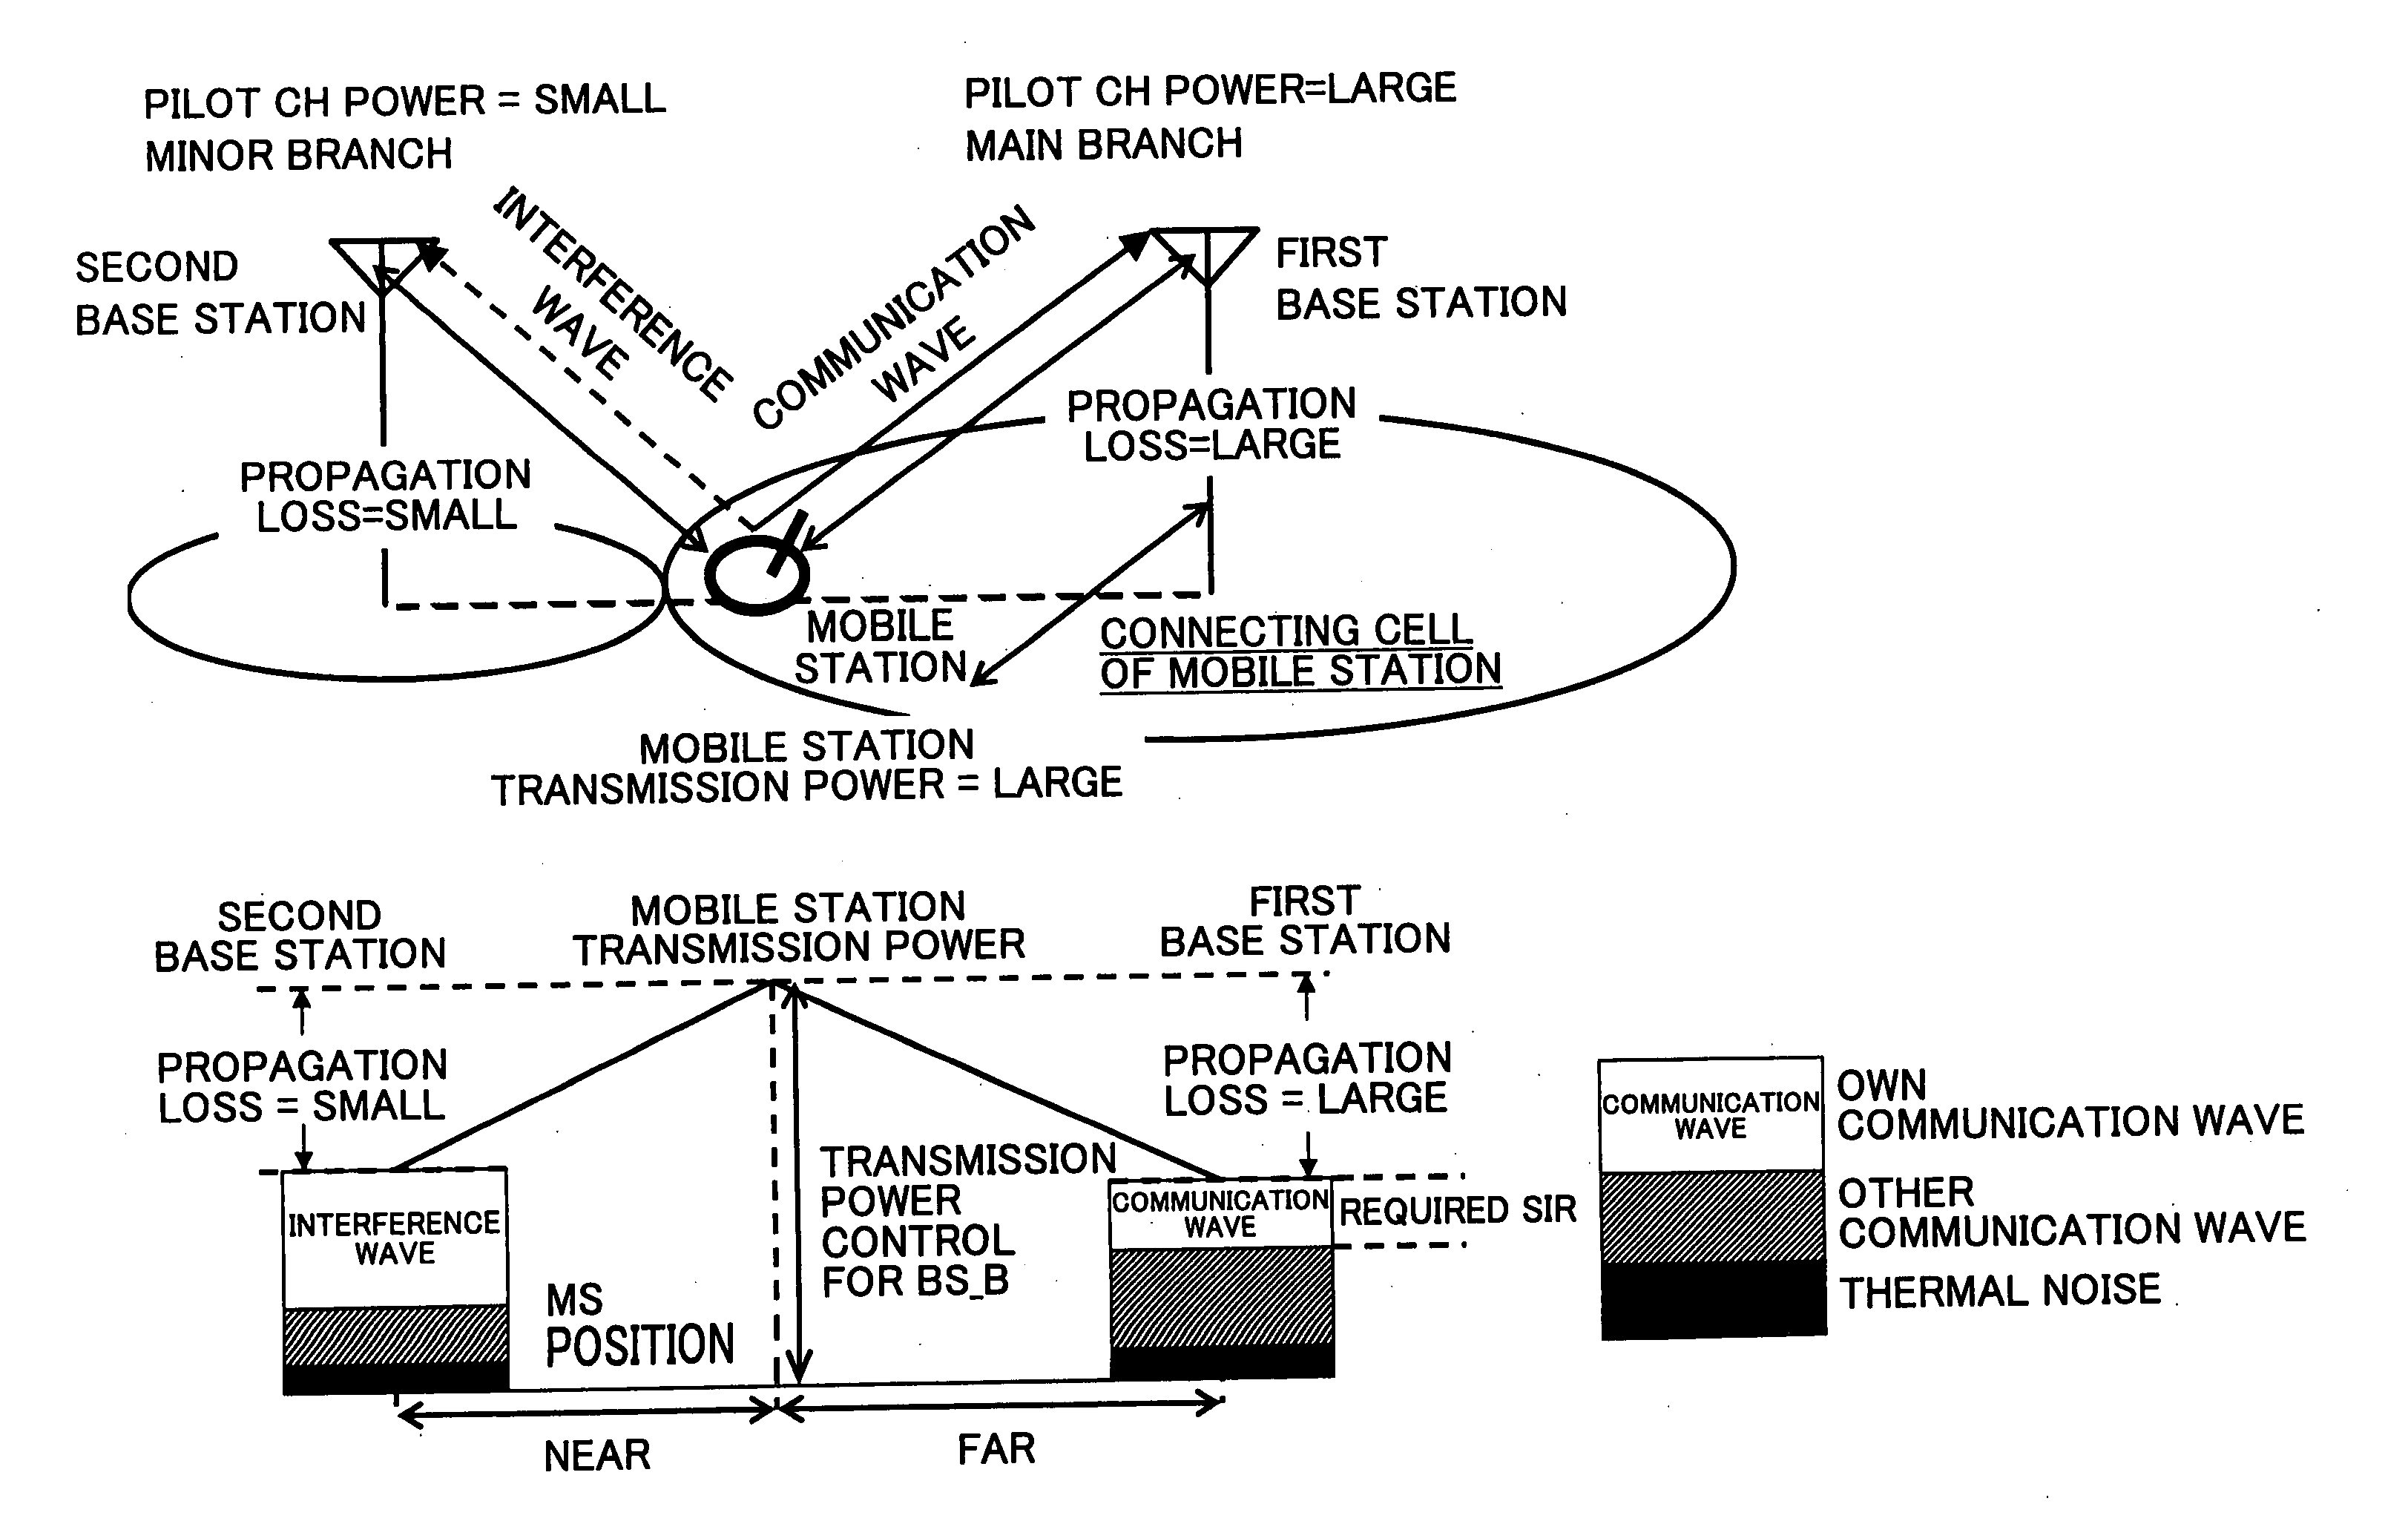 Base station and transmission power control method